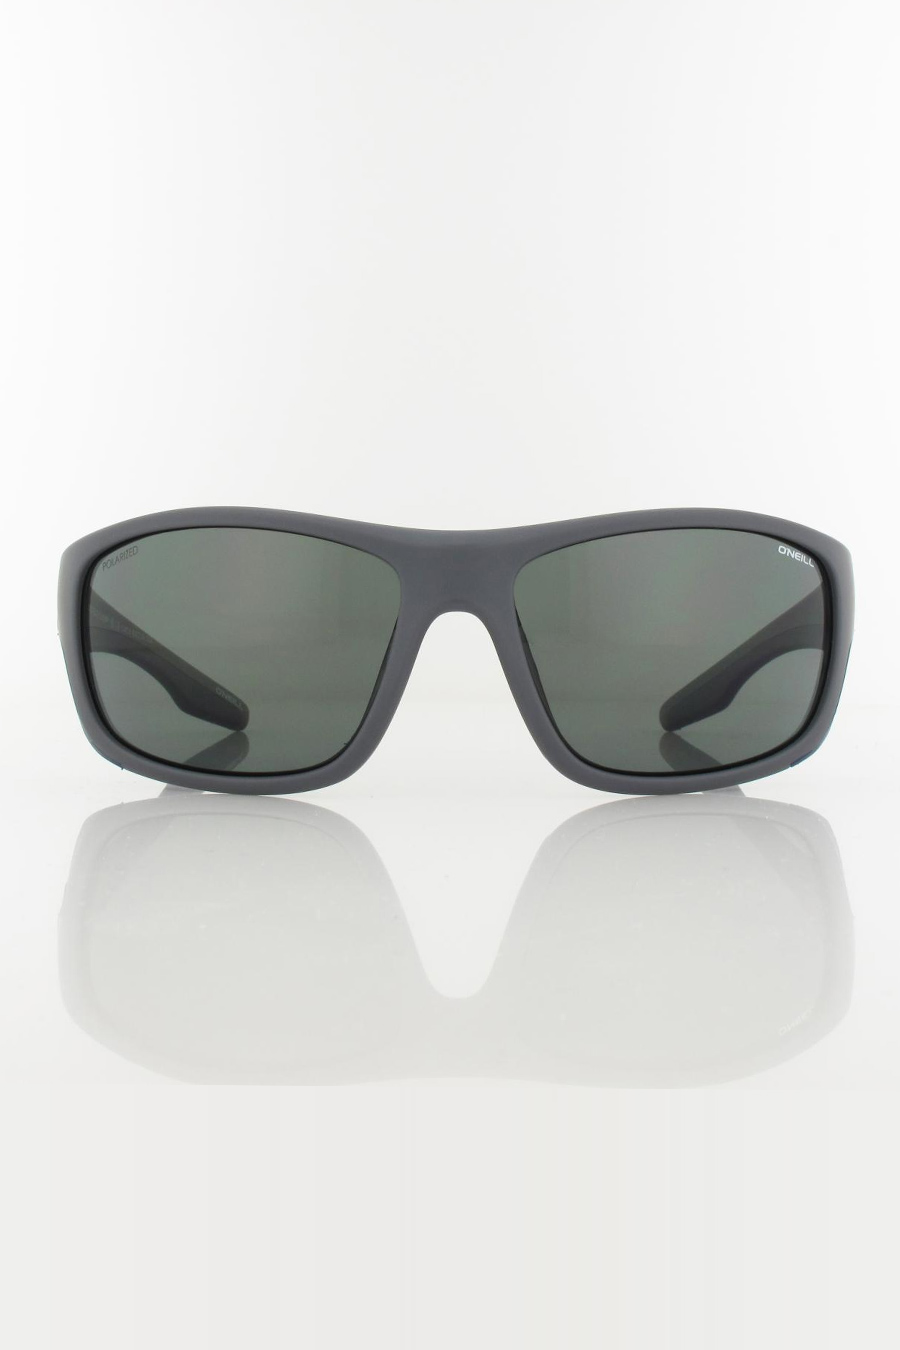 Sunglasses ONEILL ONS-9017-20-108P